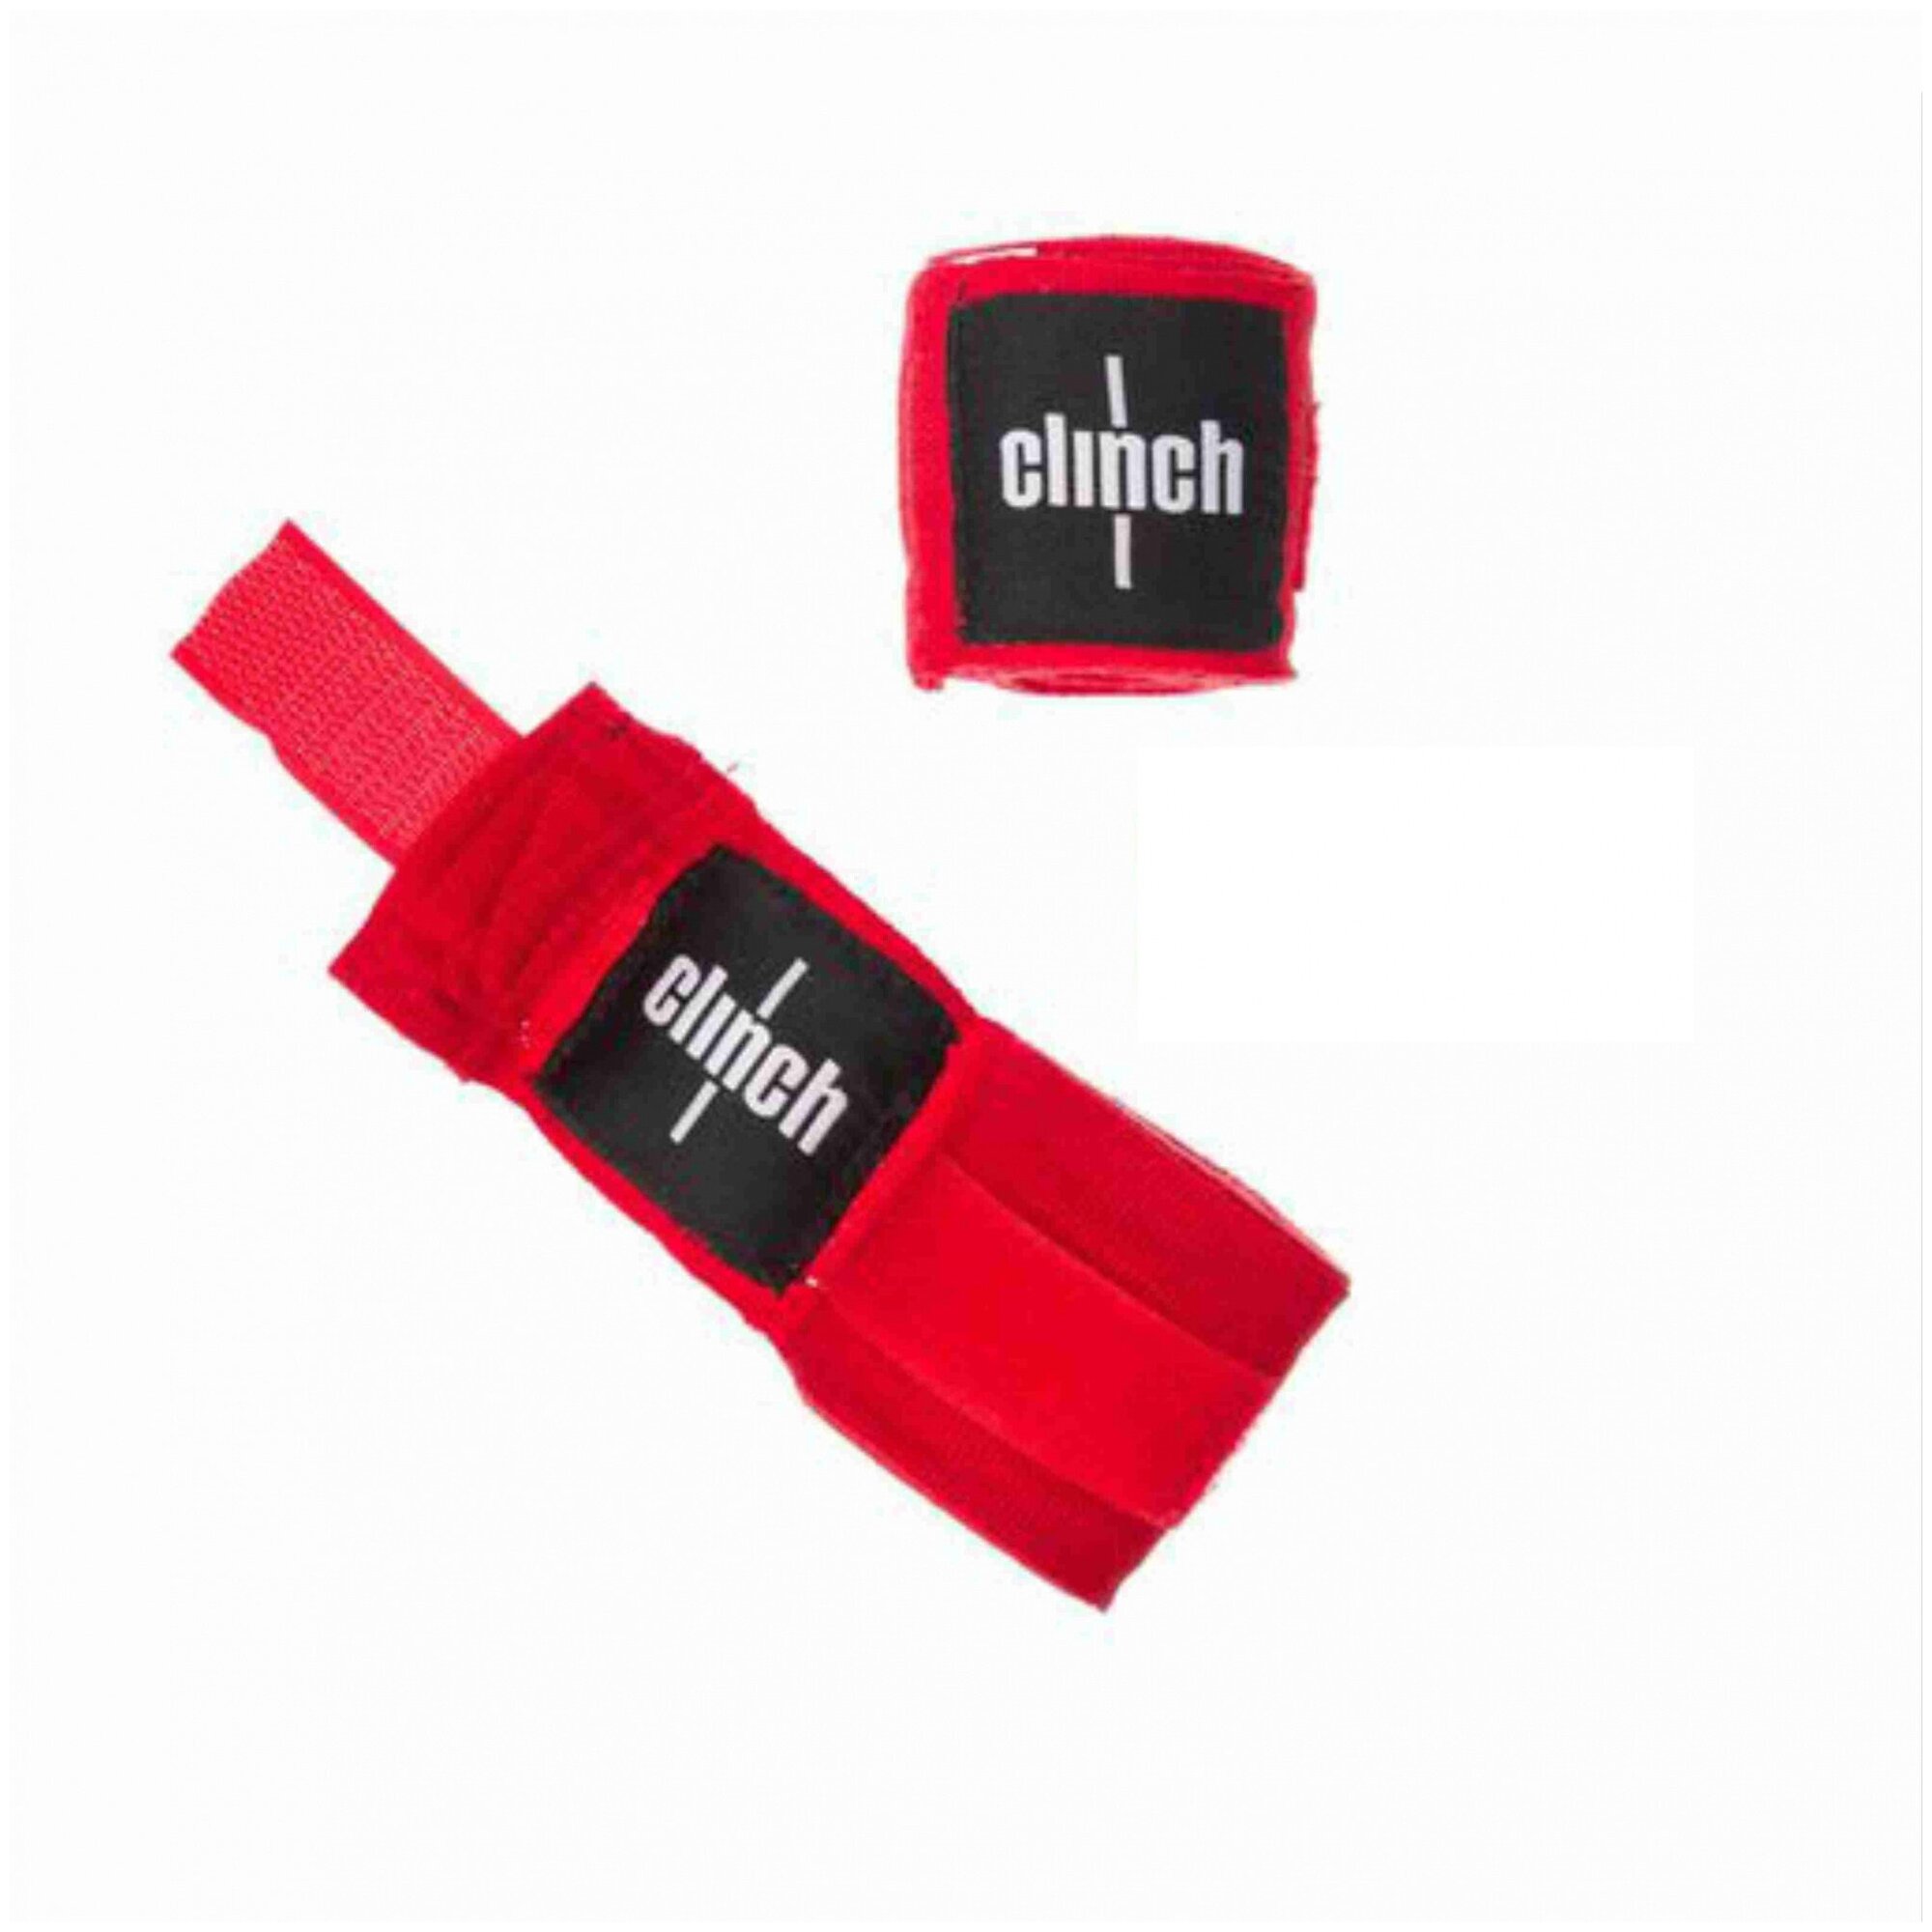 C139 Бинты эластичные Clinch Boxing Crepe Bandage Punch красные - Clinch - Красный - 2,5 м.